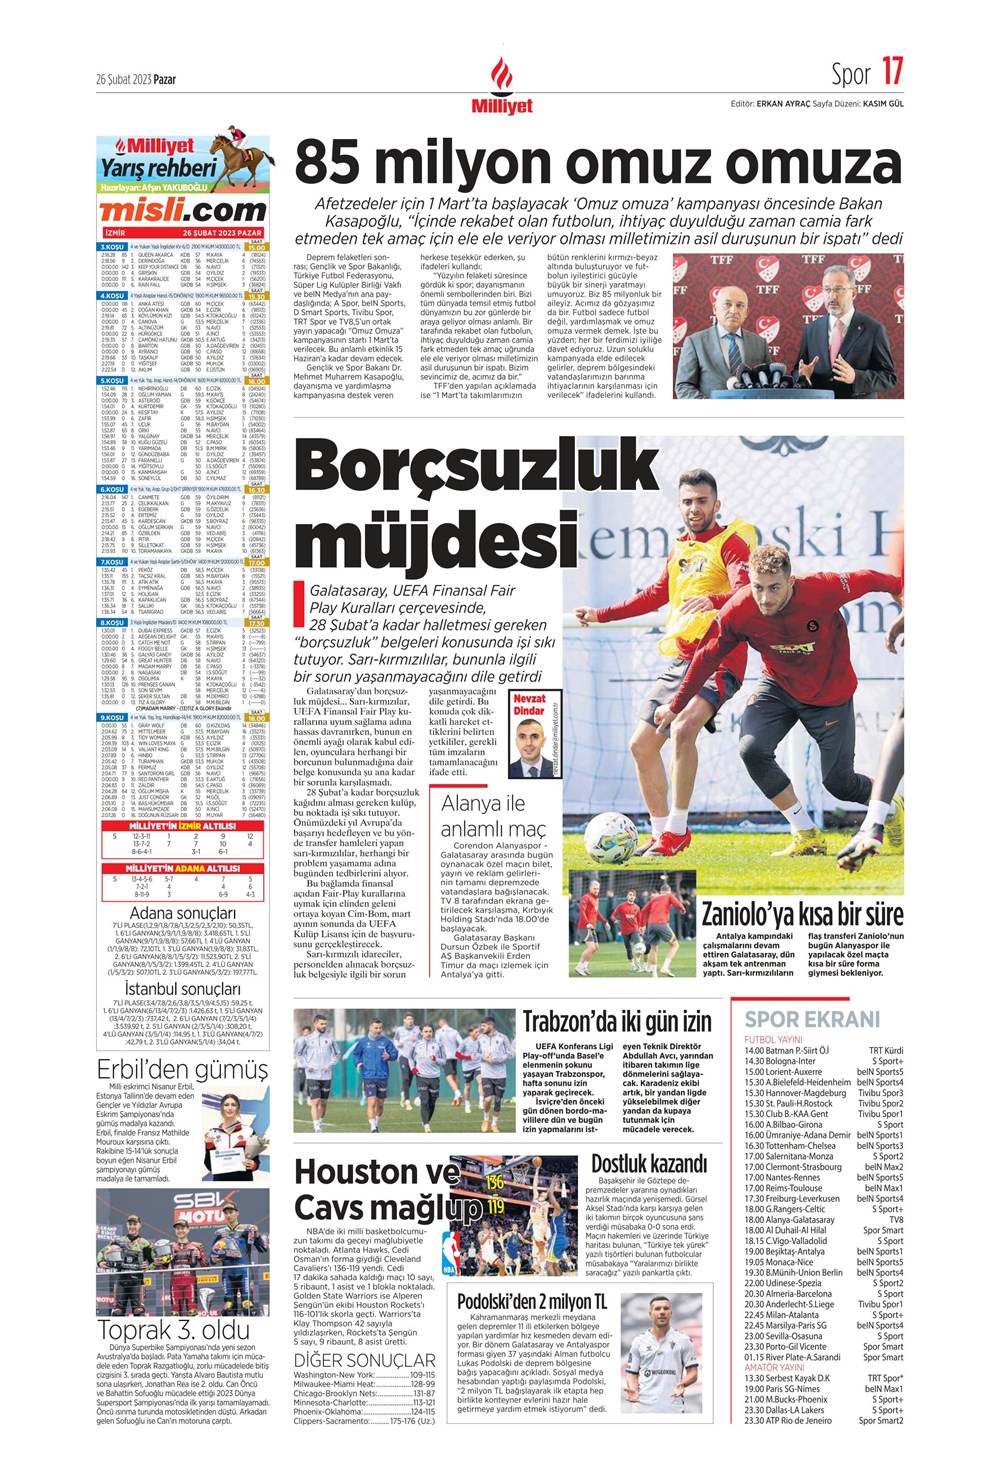 "Valenci'ağa' böyle istedi" - Sporun manşetleri  - 19. Foto